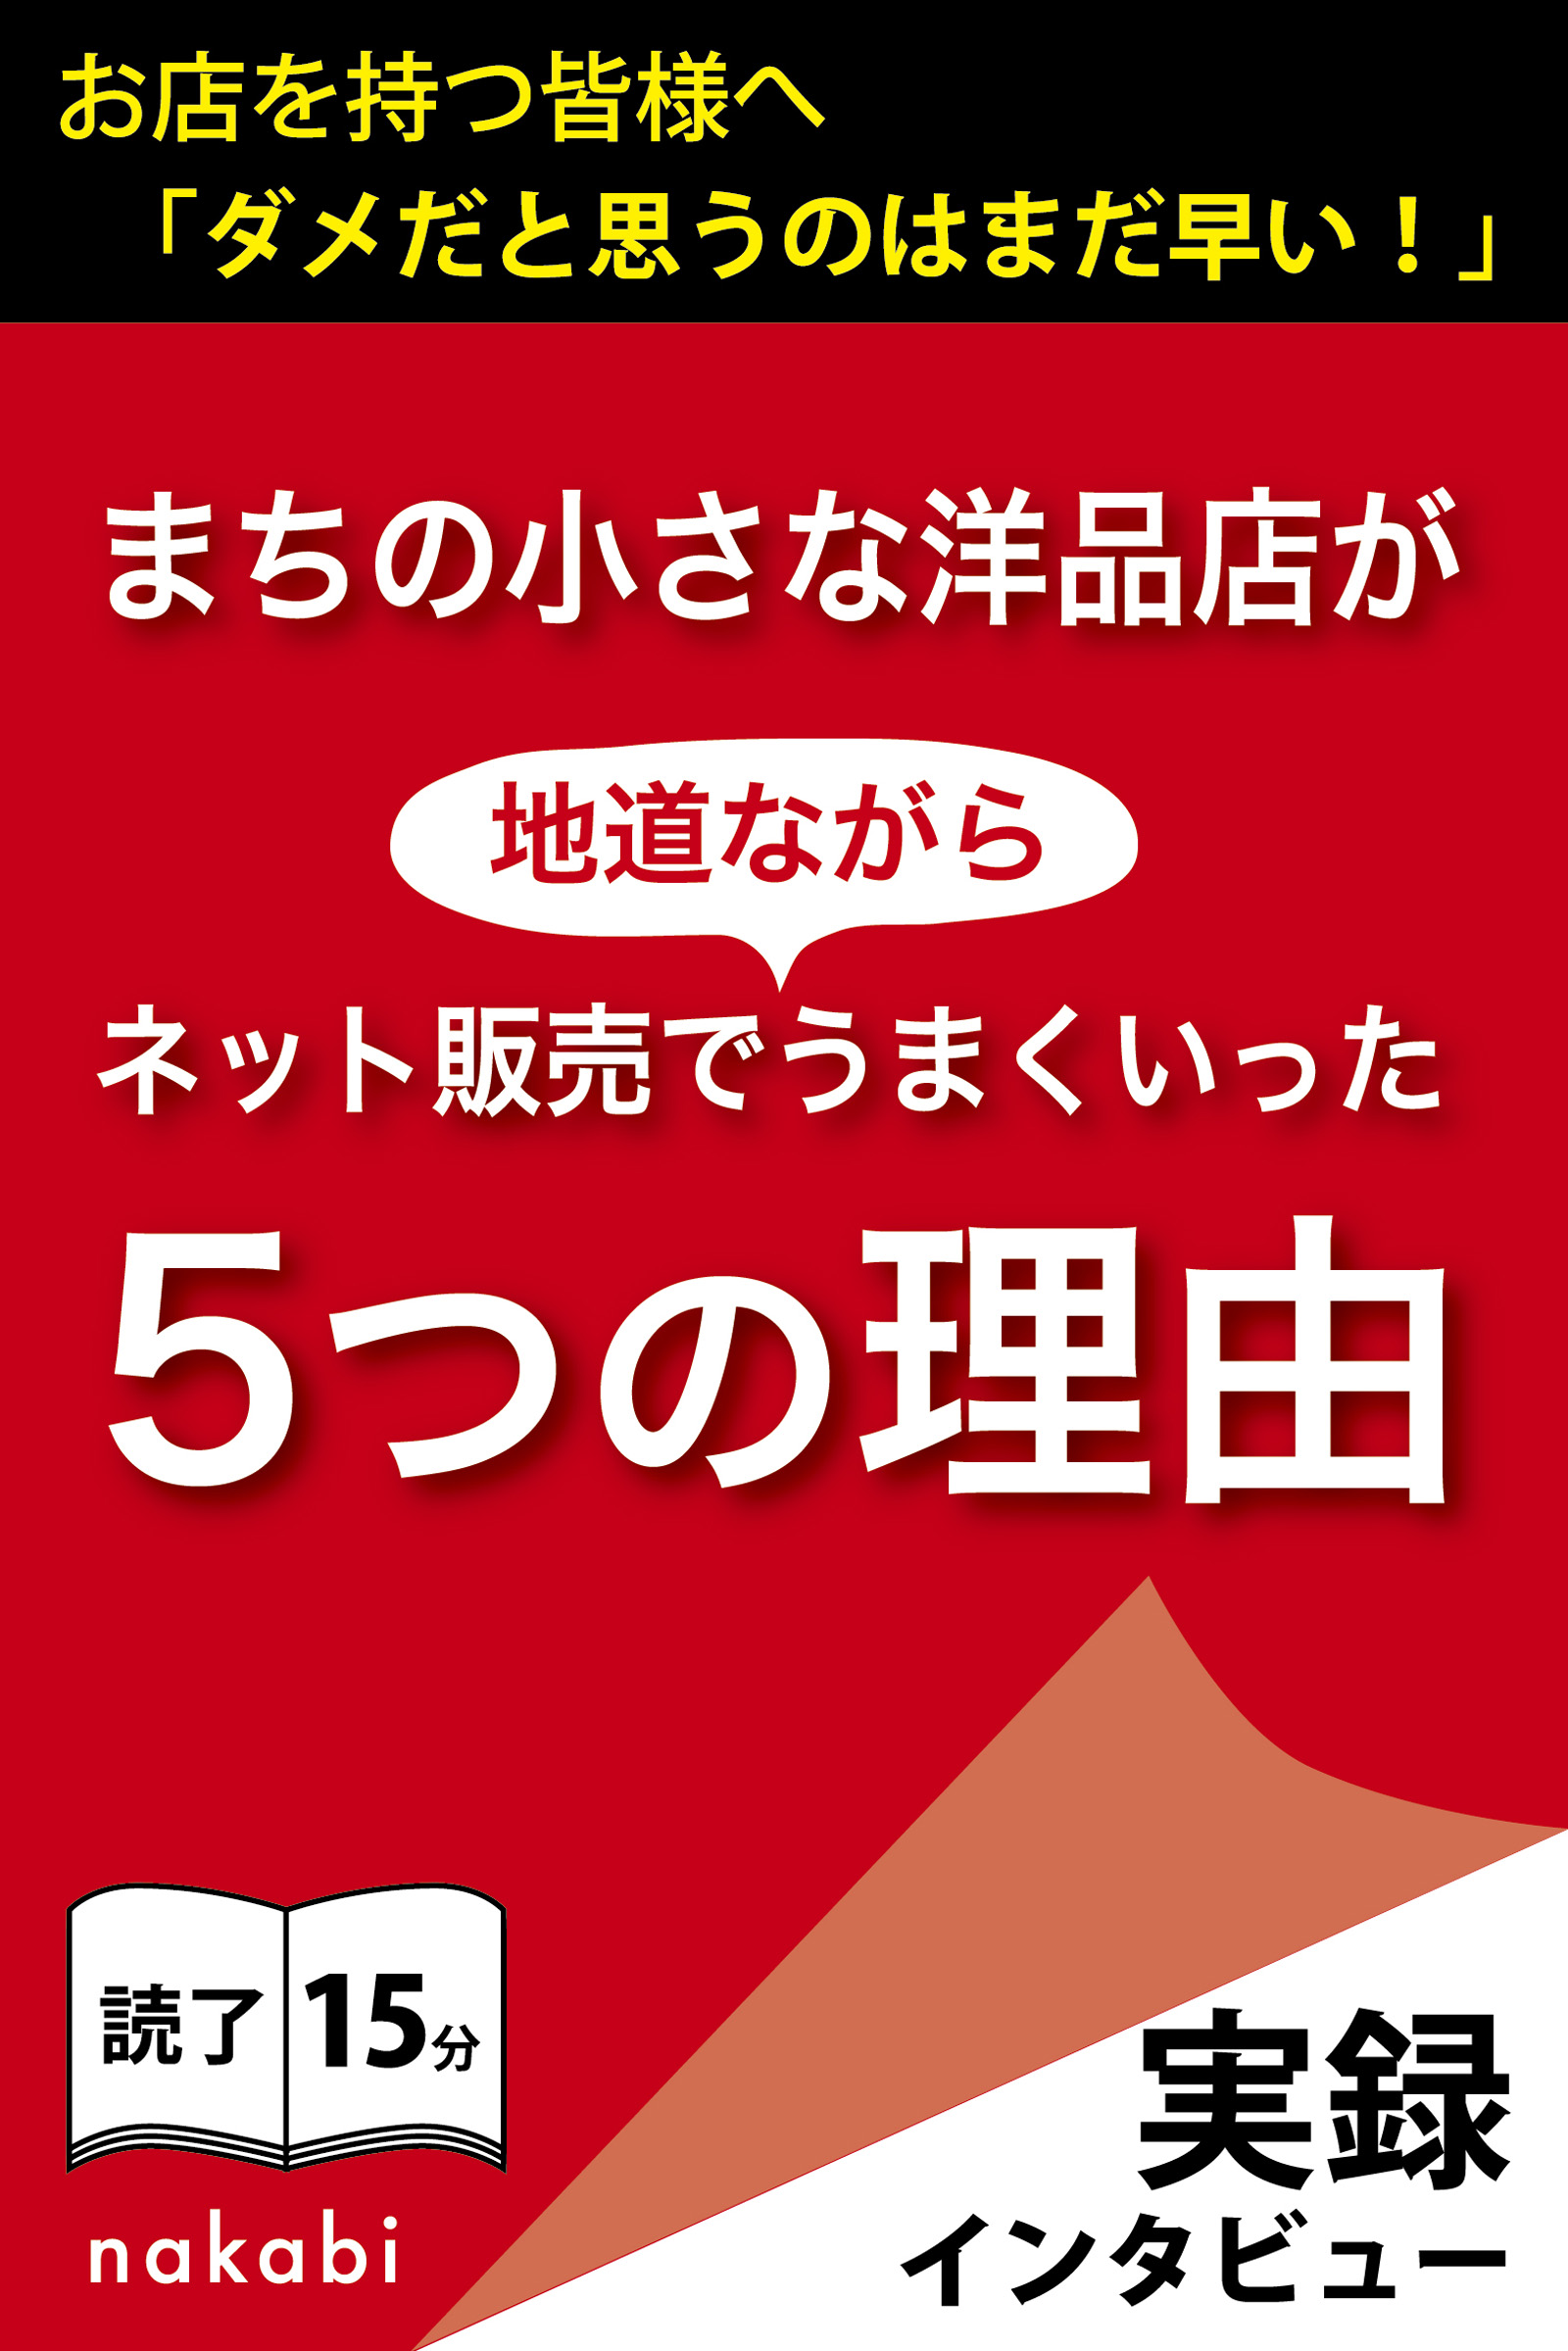 http://nakabi.jp/5%E3%81%AE%E7%90%86%E7%94%B103.jpg